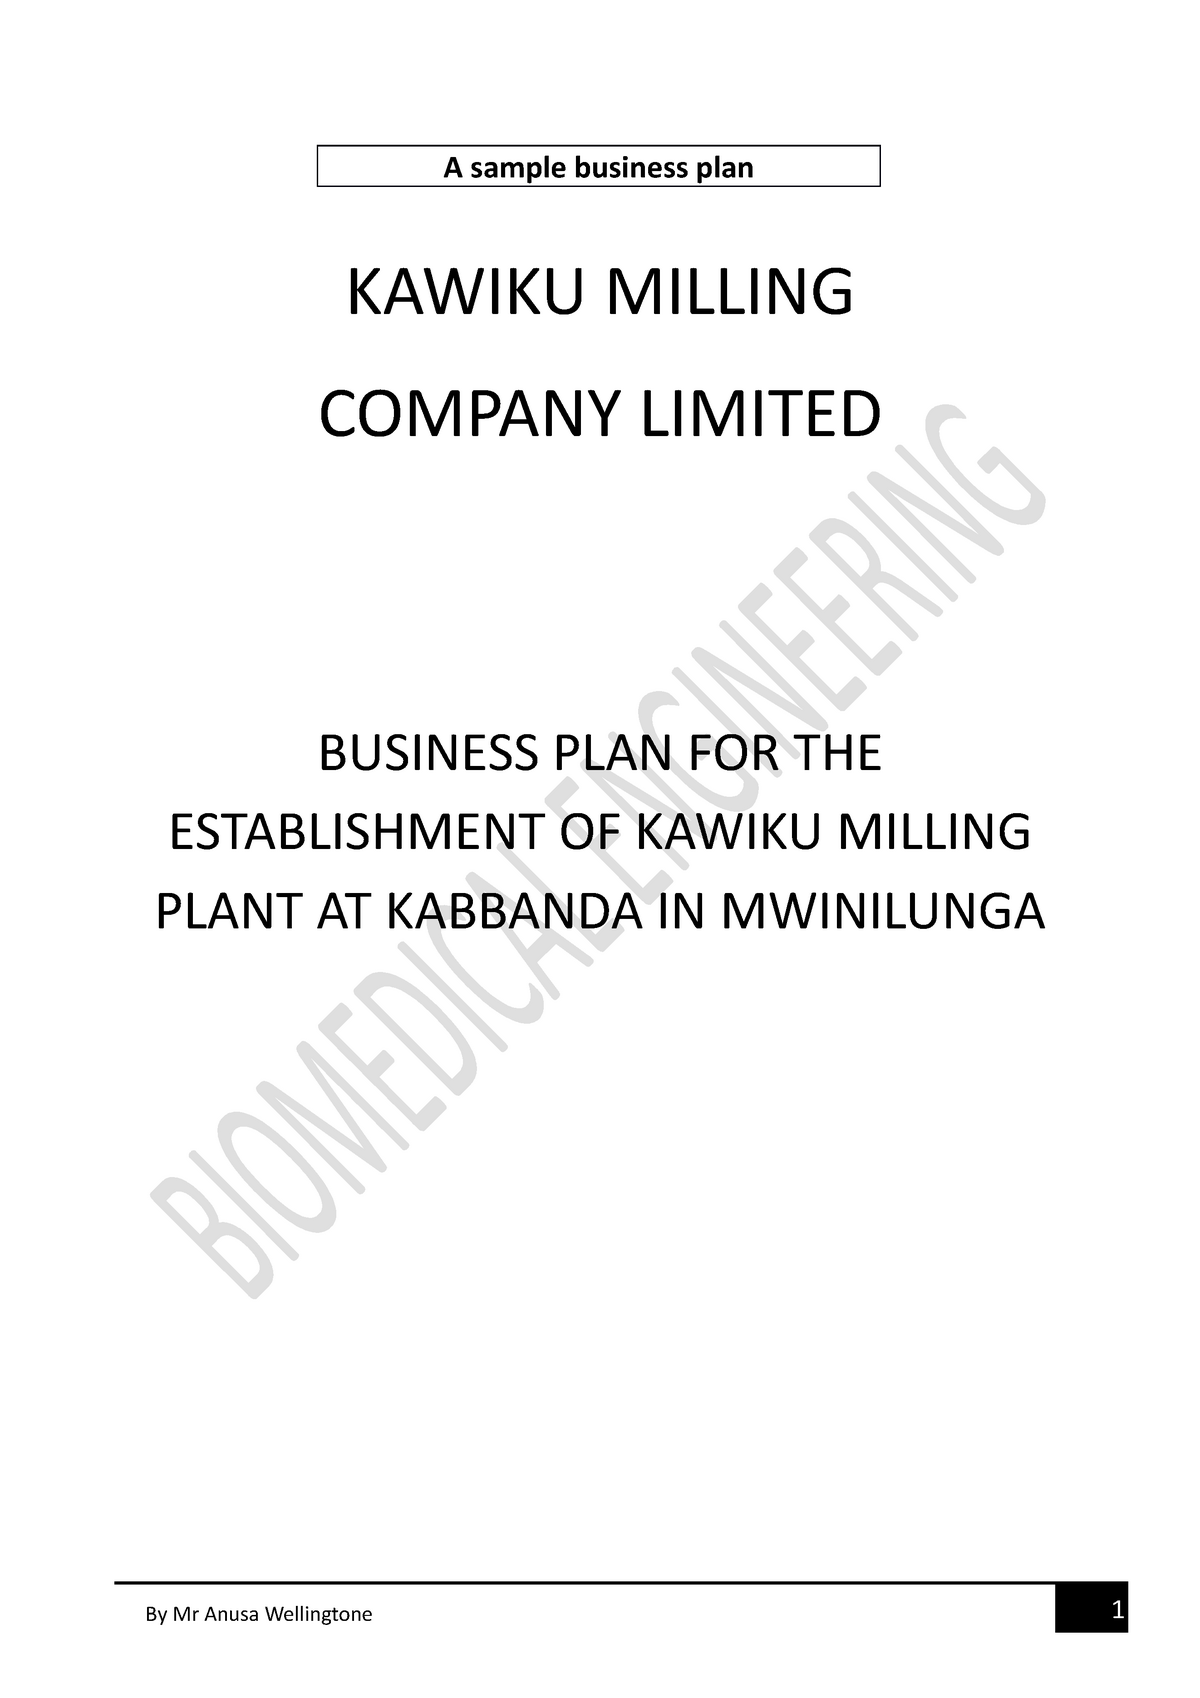 milling company business plan pdf